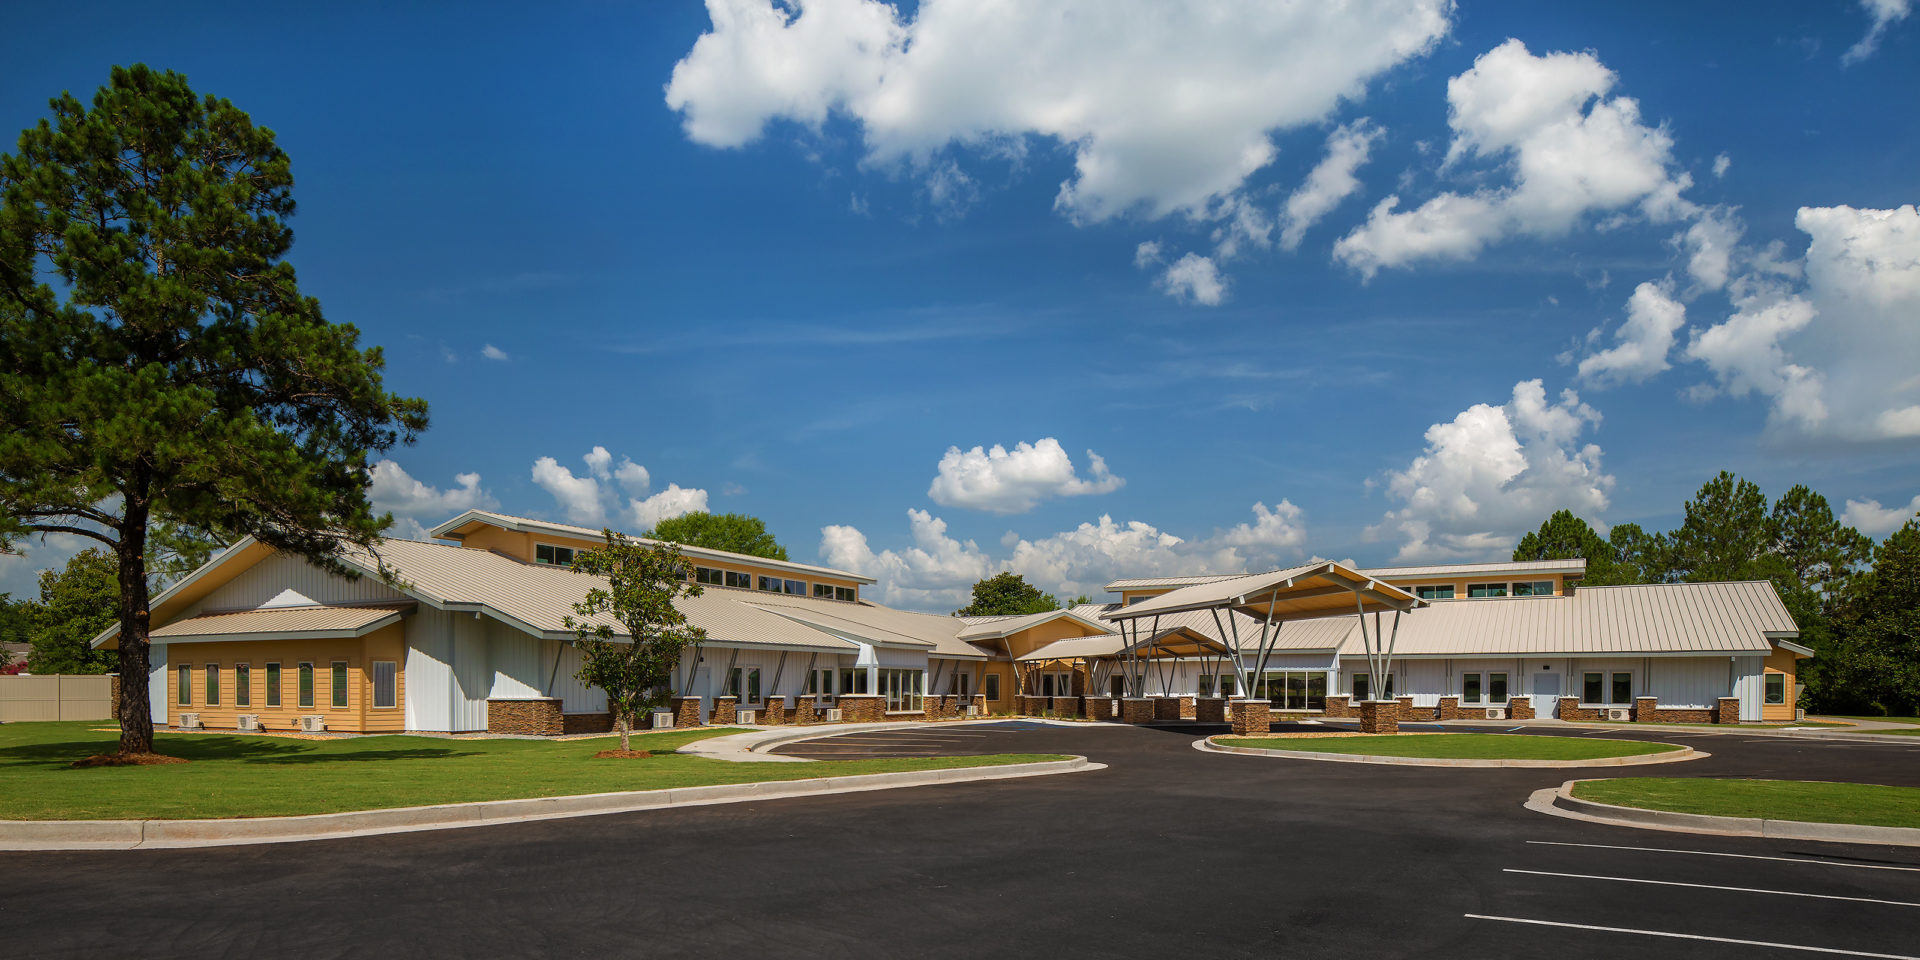 Magnolia Manor Memory Care Assisted Living Facility; Architect: Clark Nexsen